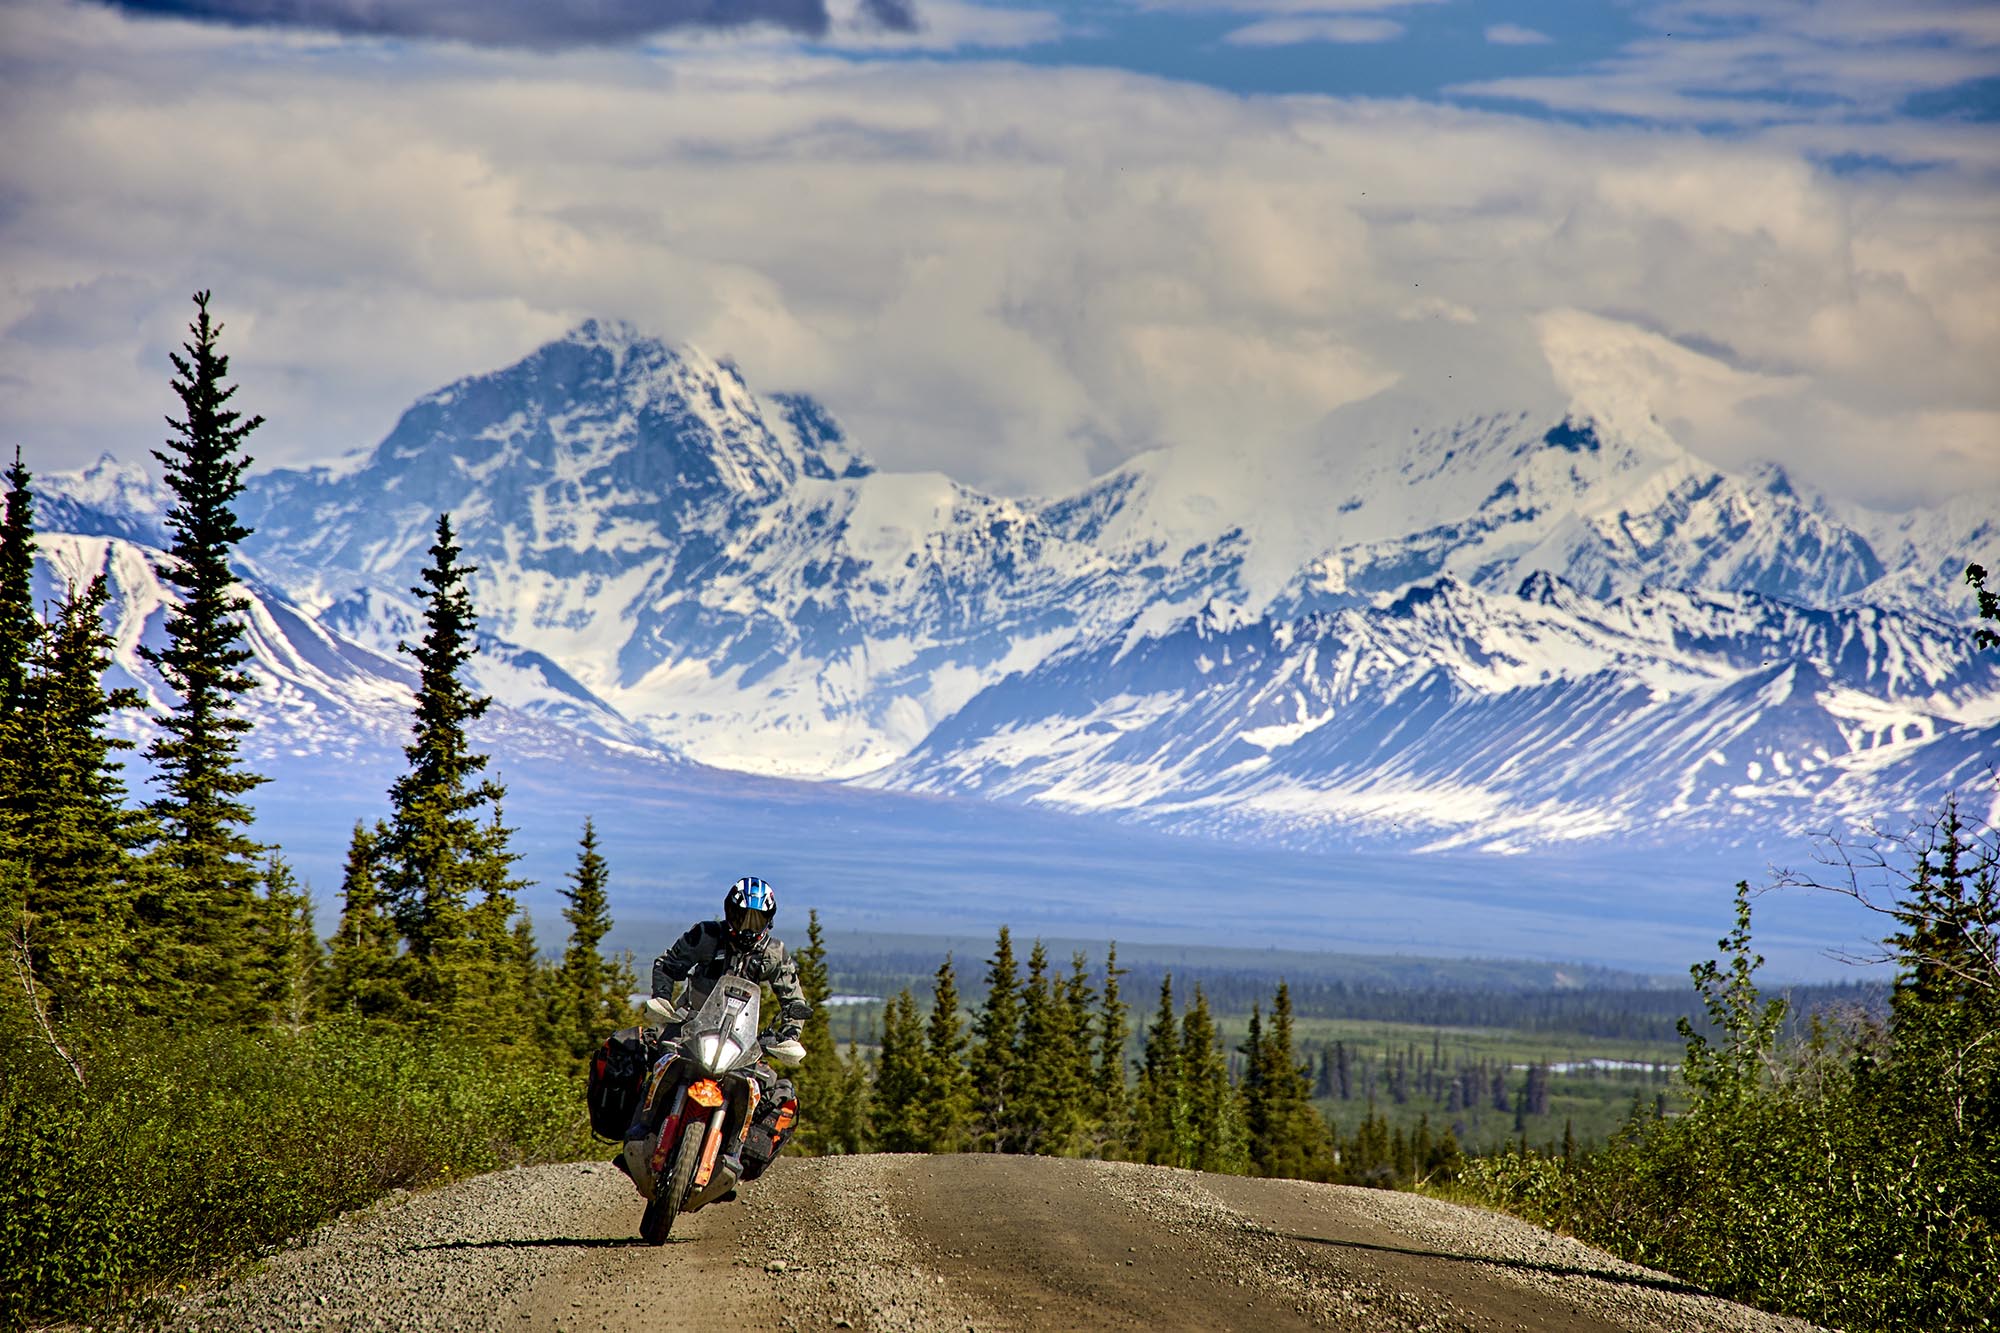 Yukon and Northwestern Territory - The Last Frontier